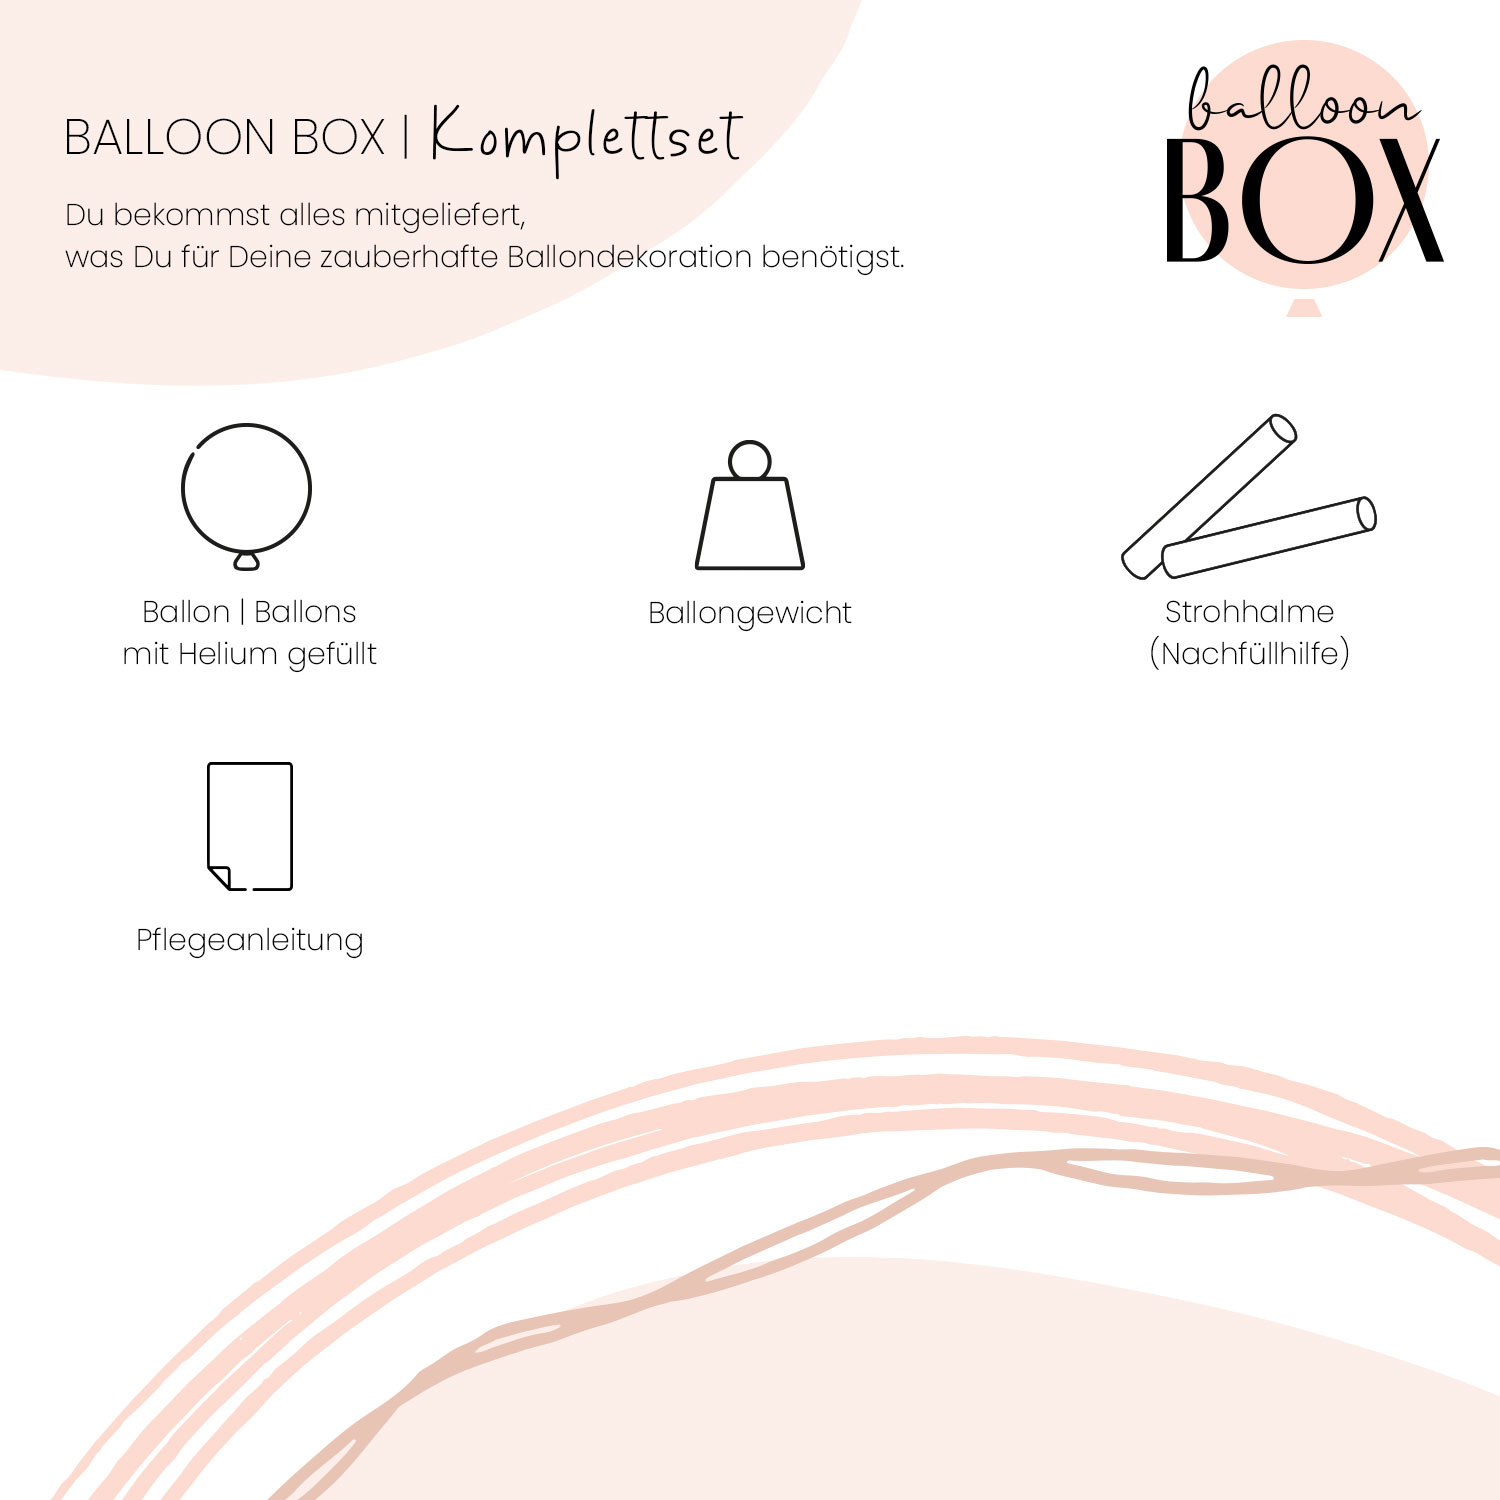 Heliumballon in a Box - Mitten ins Herz!